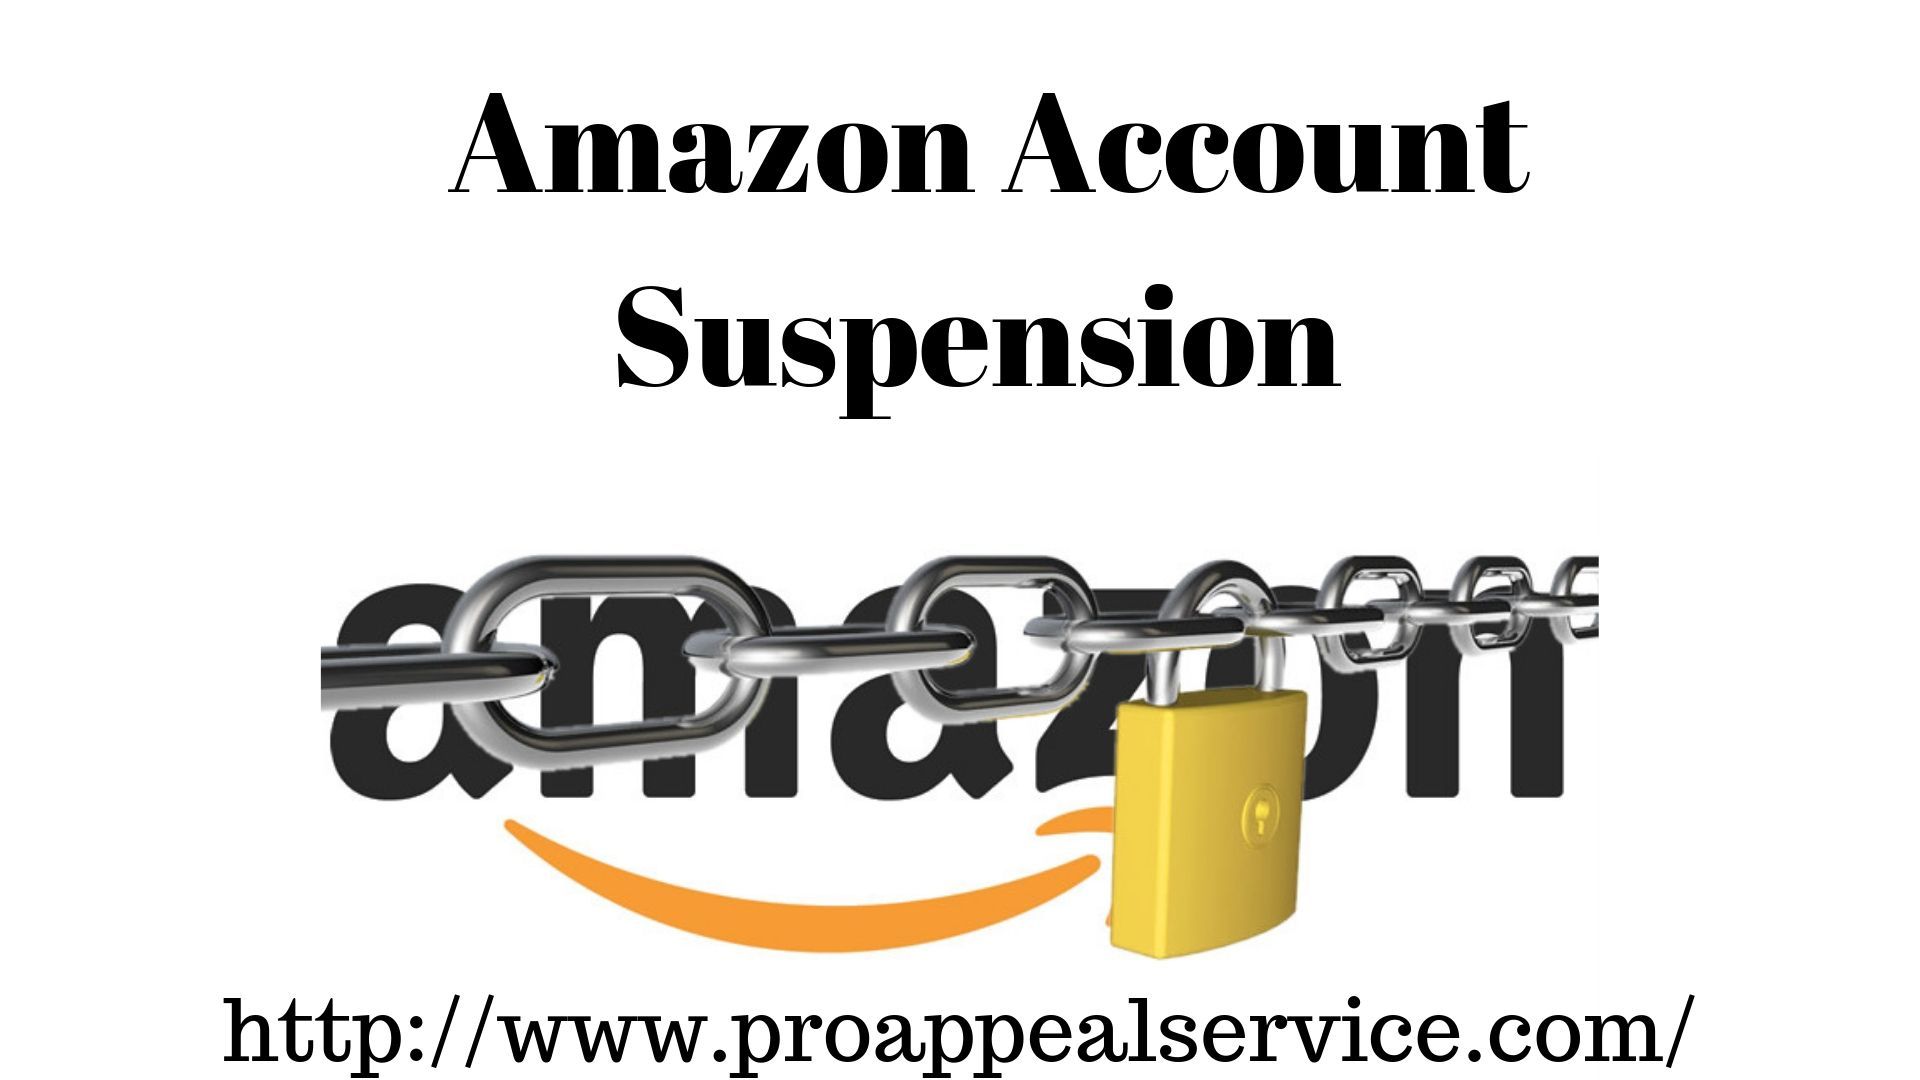 Amazon Account suspension